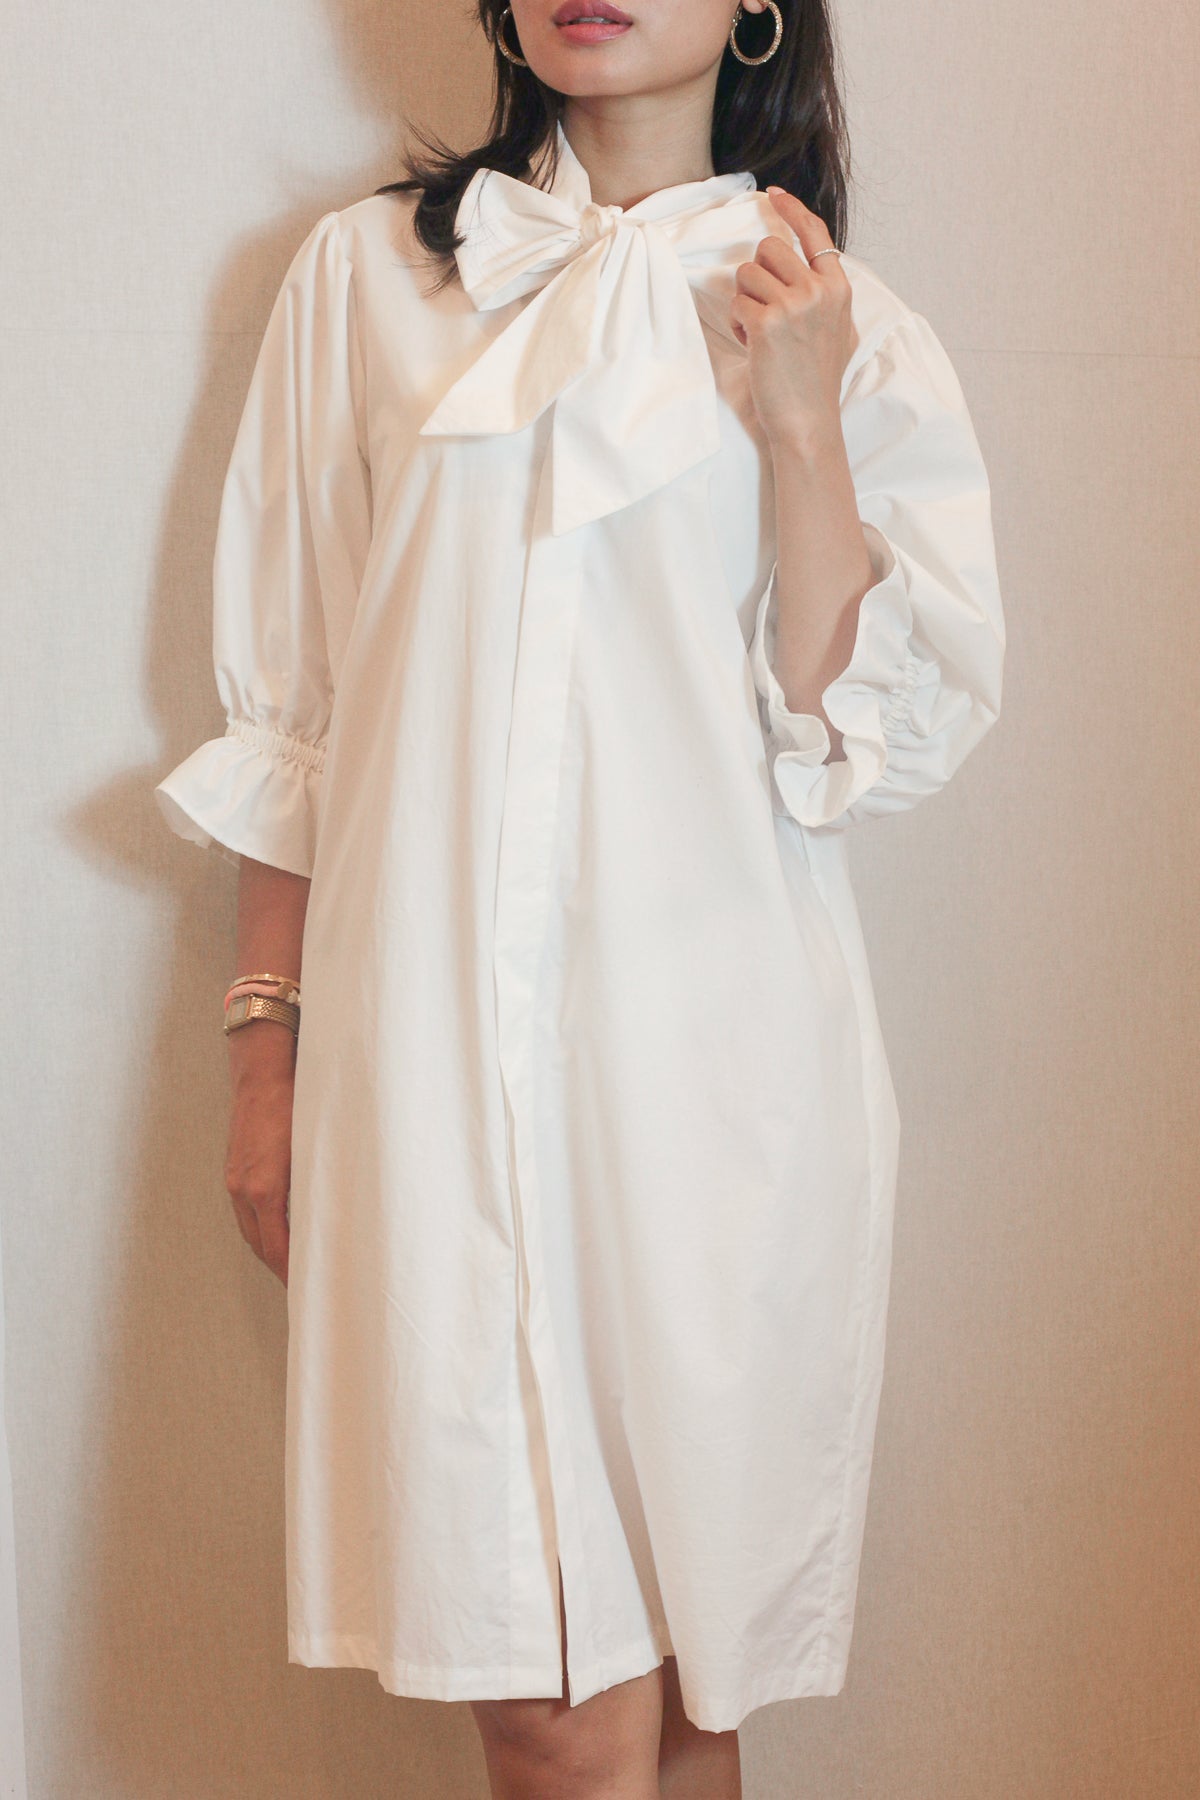 Cravat_shirt_dress_white-9042_1_.jpg